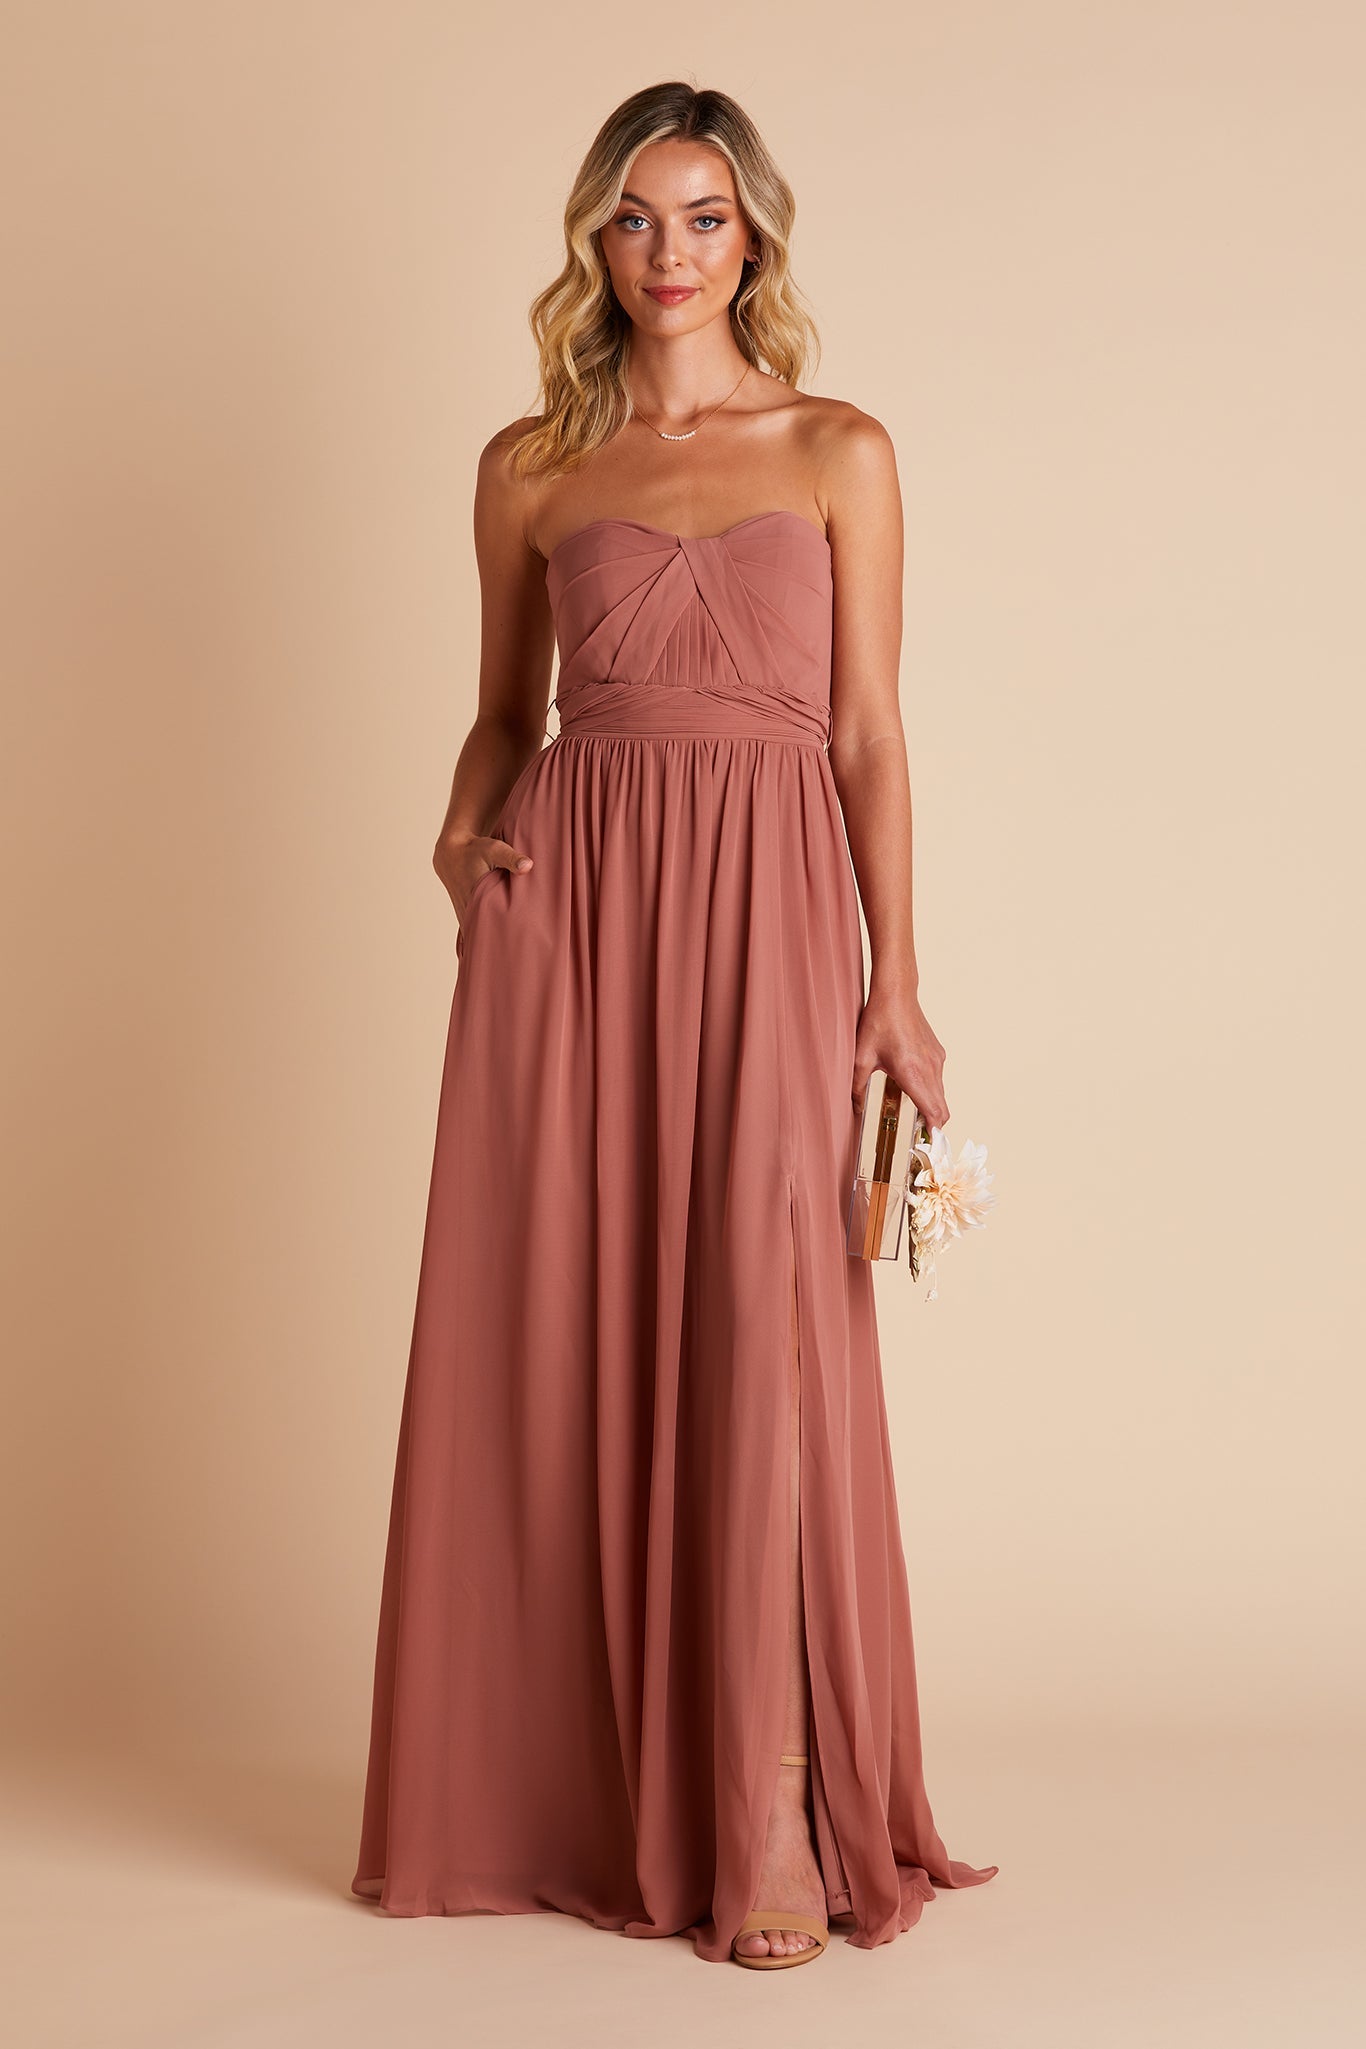 Grace Convertible Chiffon Bridesmaid Dress with Slit in Blush Pink